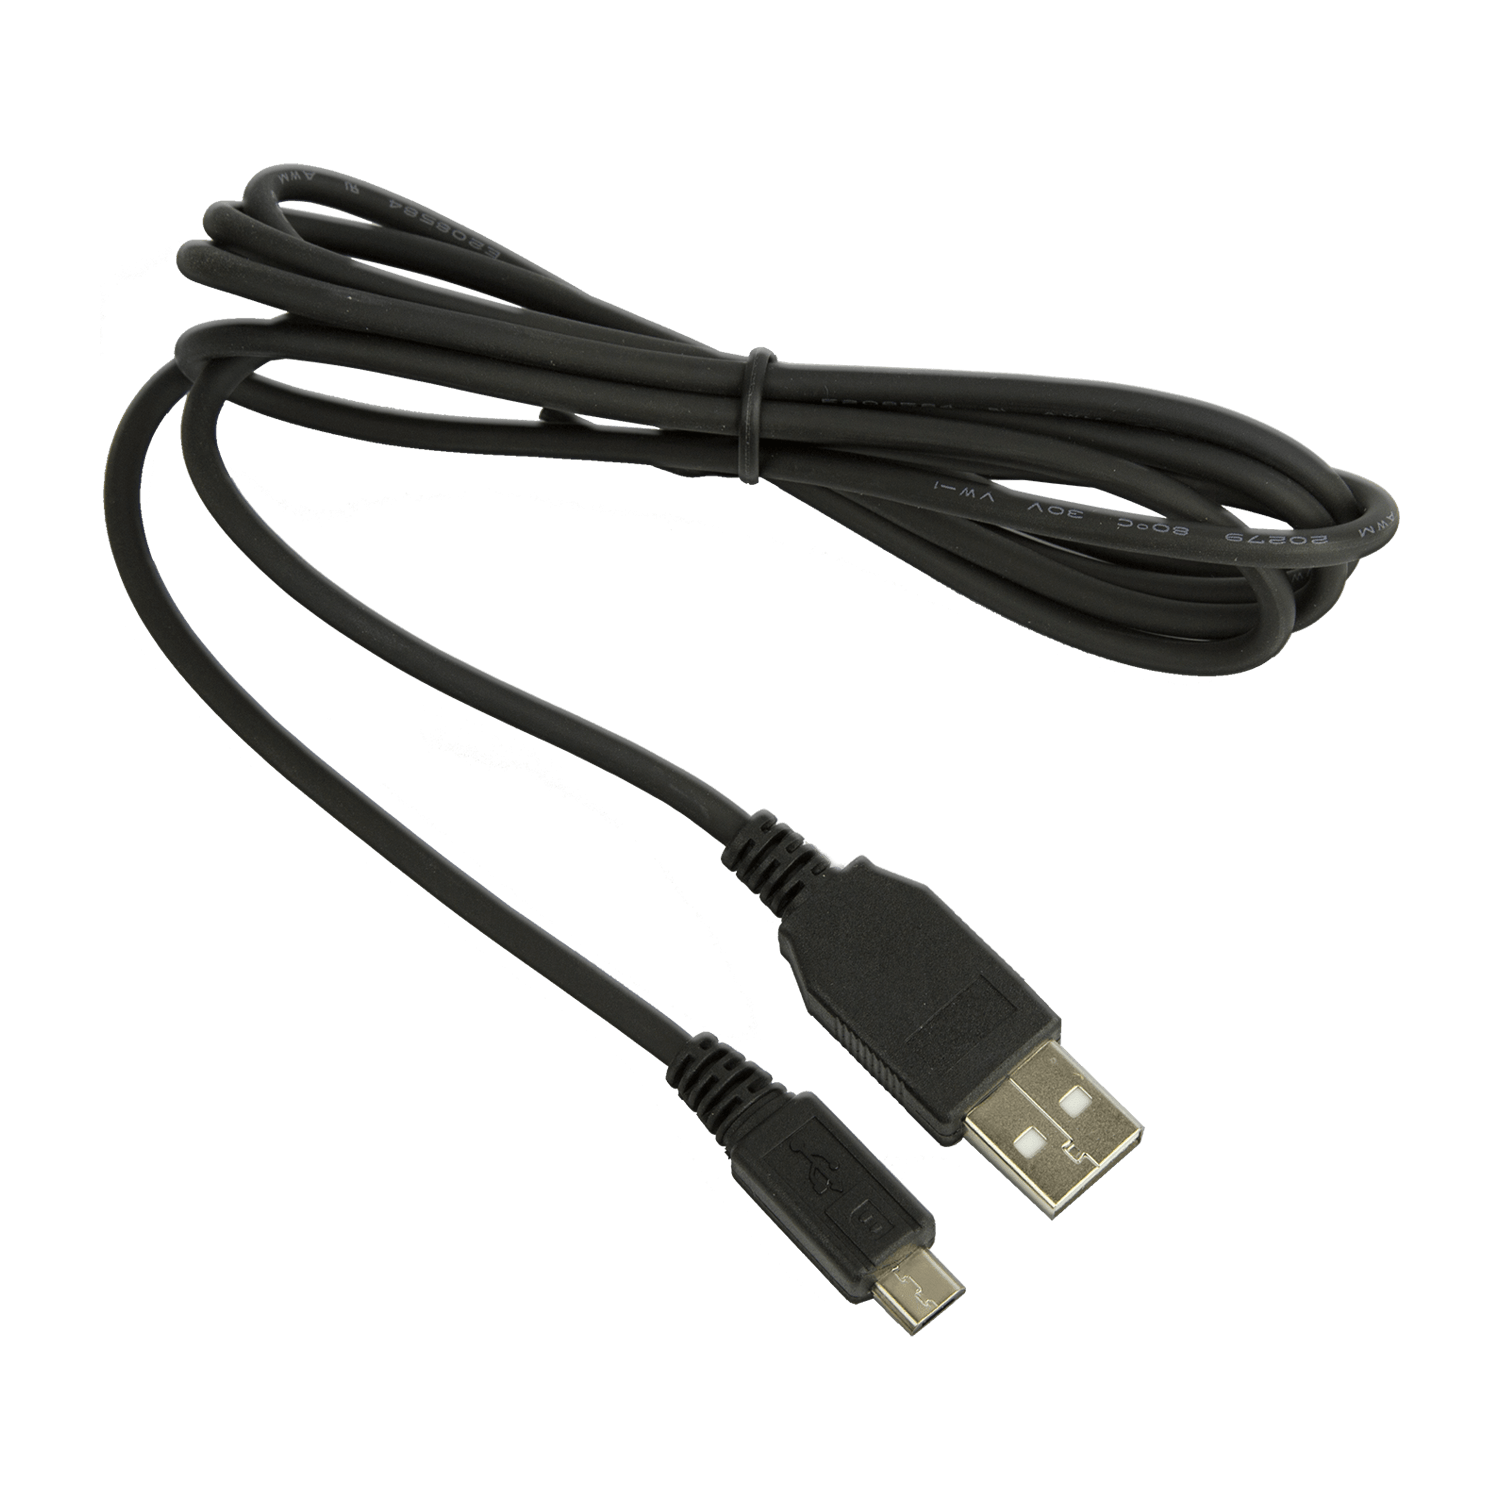 Jabra USB Data Cable for Jabra Elite Active 65t 2A White 